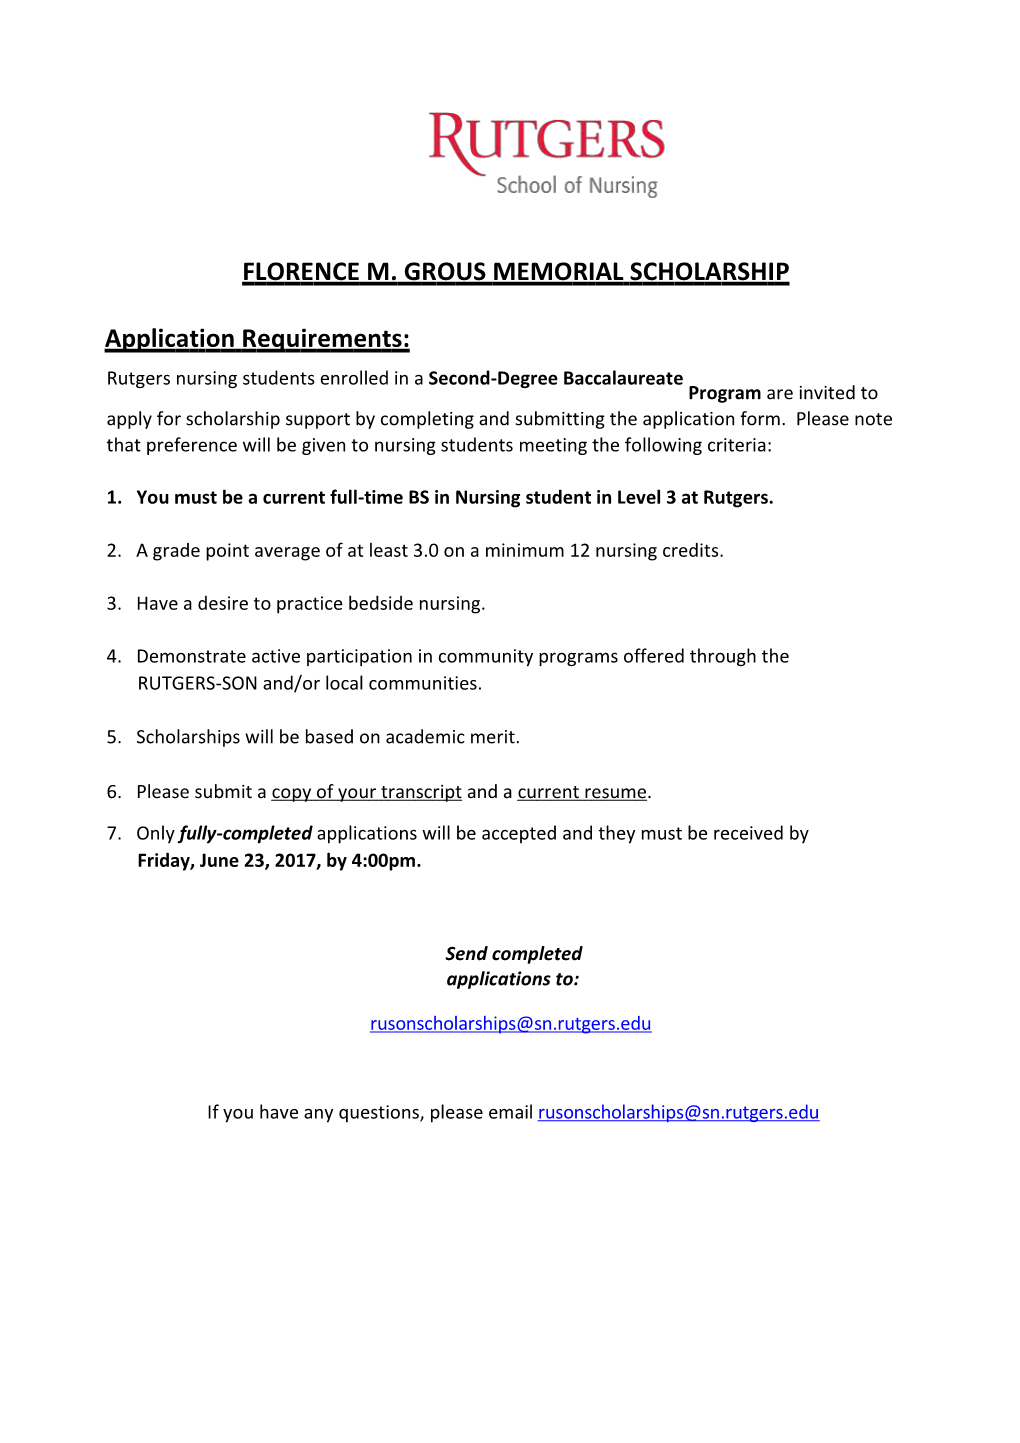 Florence M. Grous Memorial Scholarship